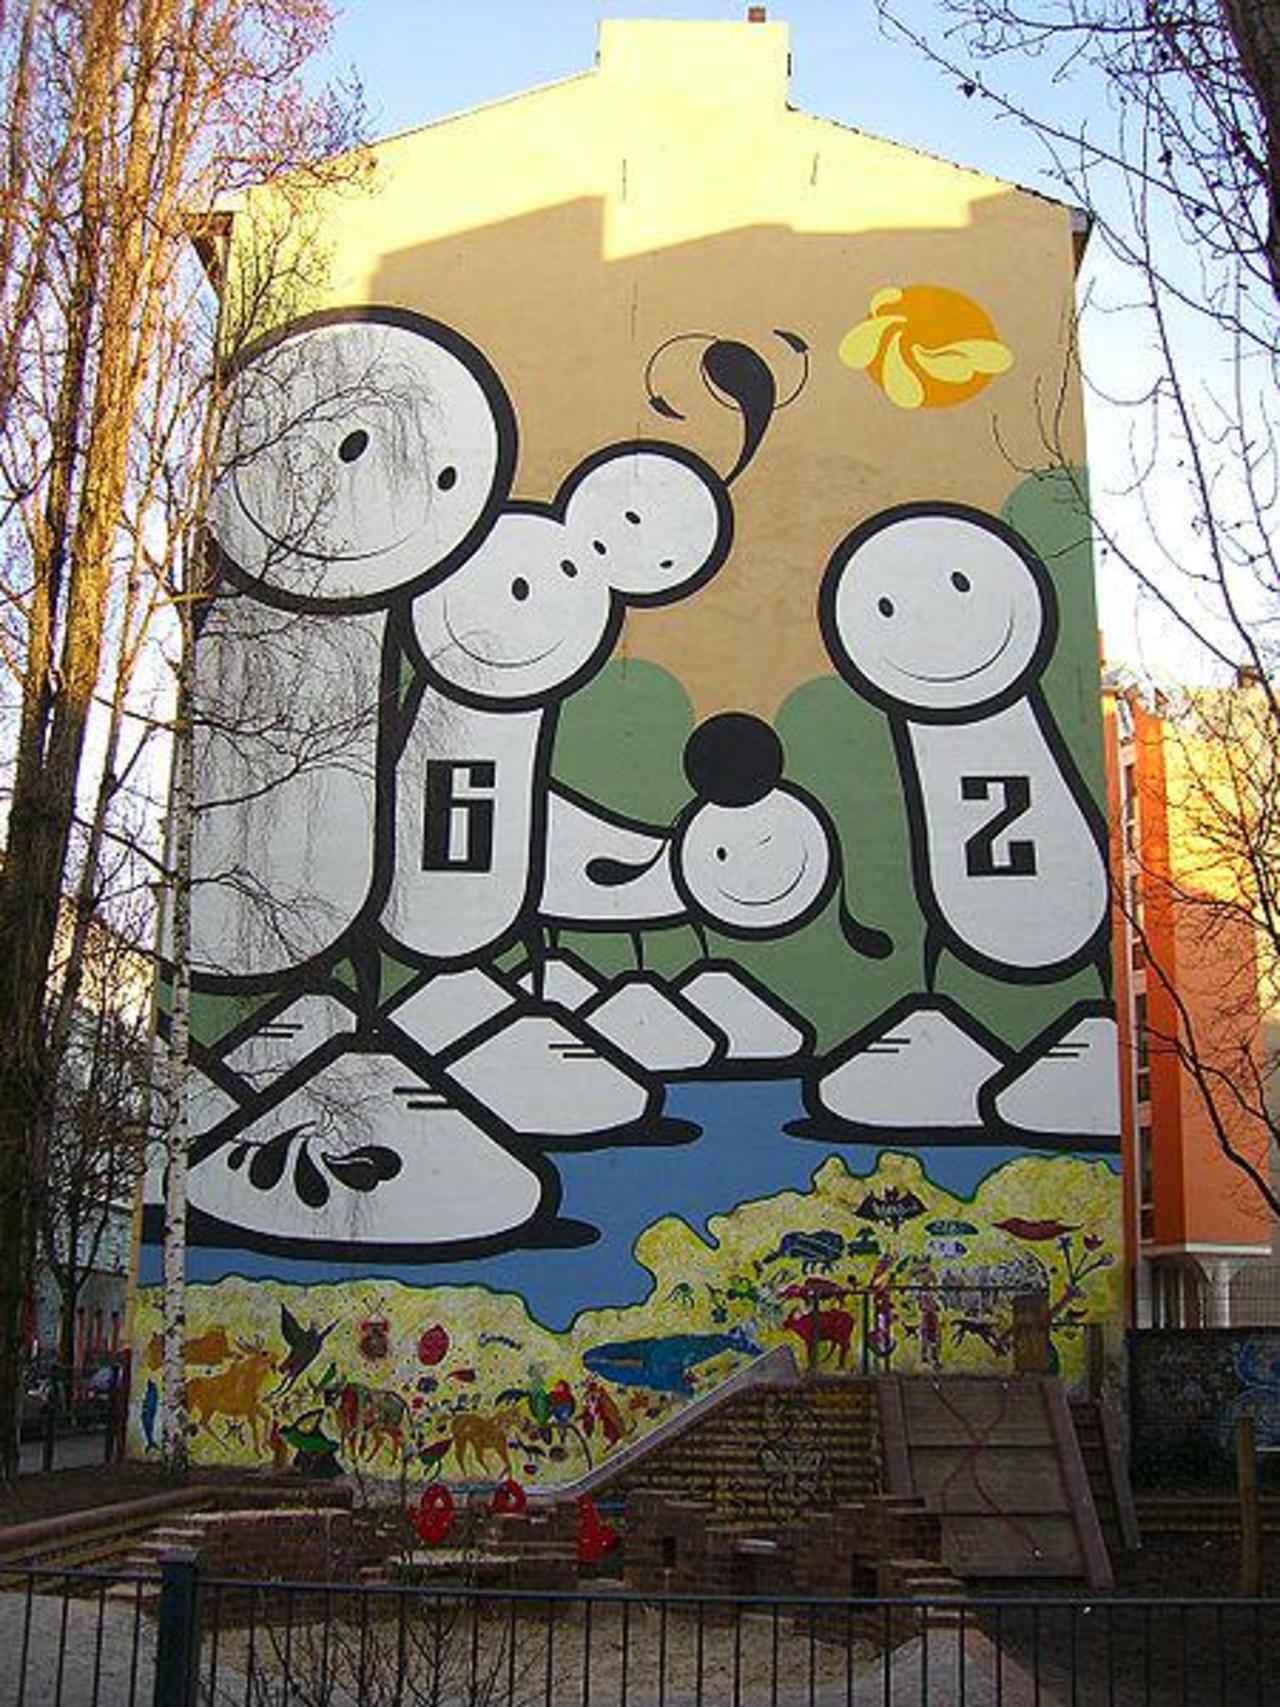 #Streetart #urbanart #graffiti #mural #graphicdesign by #artist The London Police (duo) in Berlin http://t.co/yHoo8dXOSR